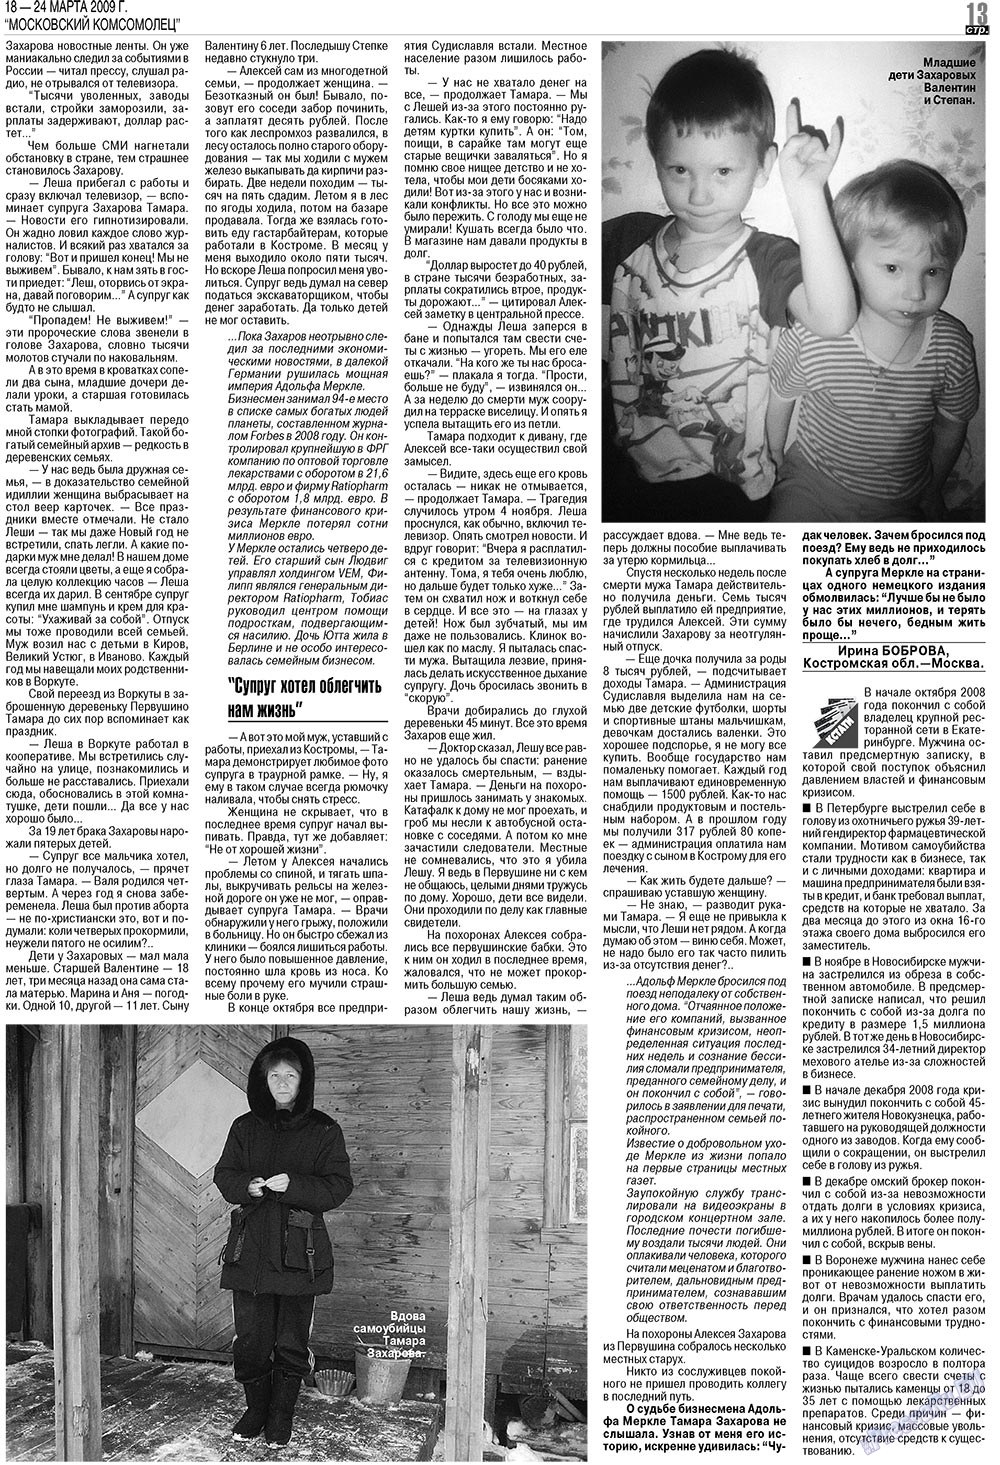 МК Испания (газета). 2009 год, номер 12, стр. 13